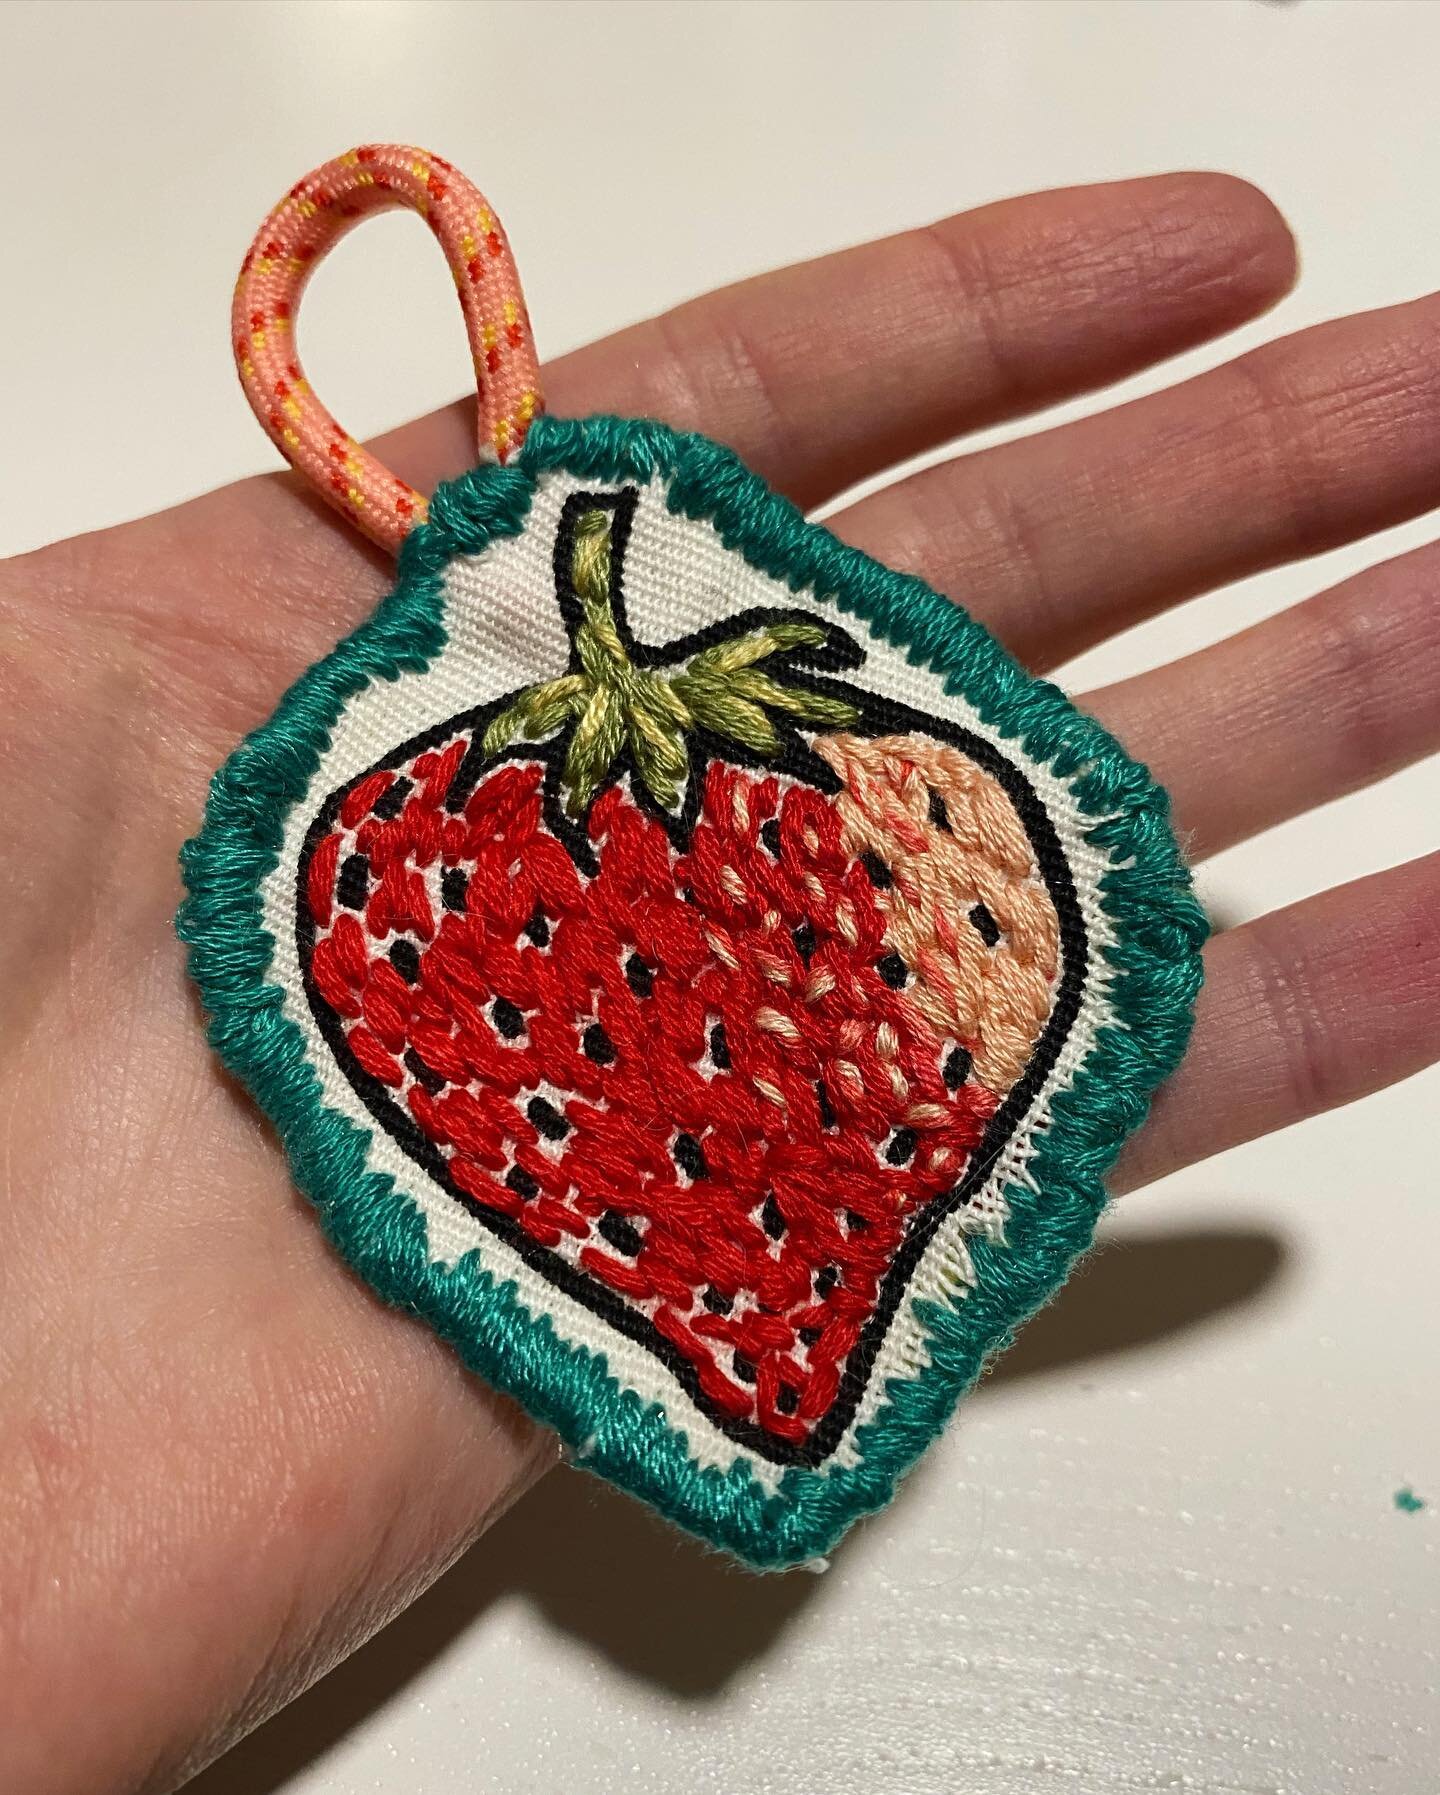 Strawberry friend keychain
.
.
#keychains #strawberry #embroidery #quickproject #sewing #threadart #threadpainting #craft #makersofinstagram